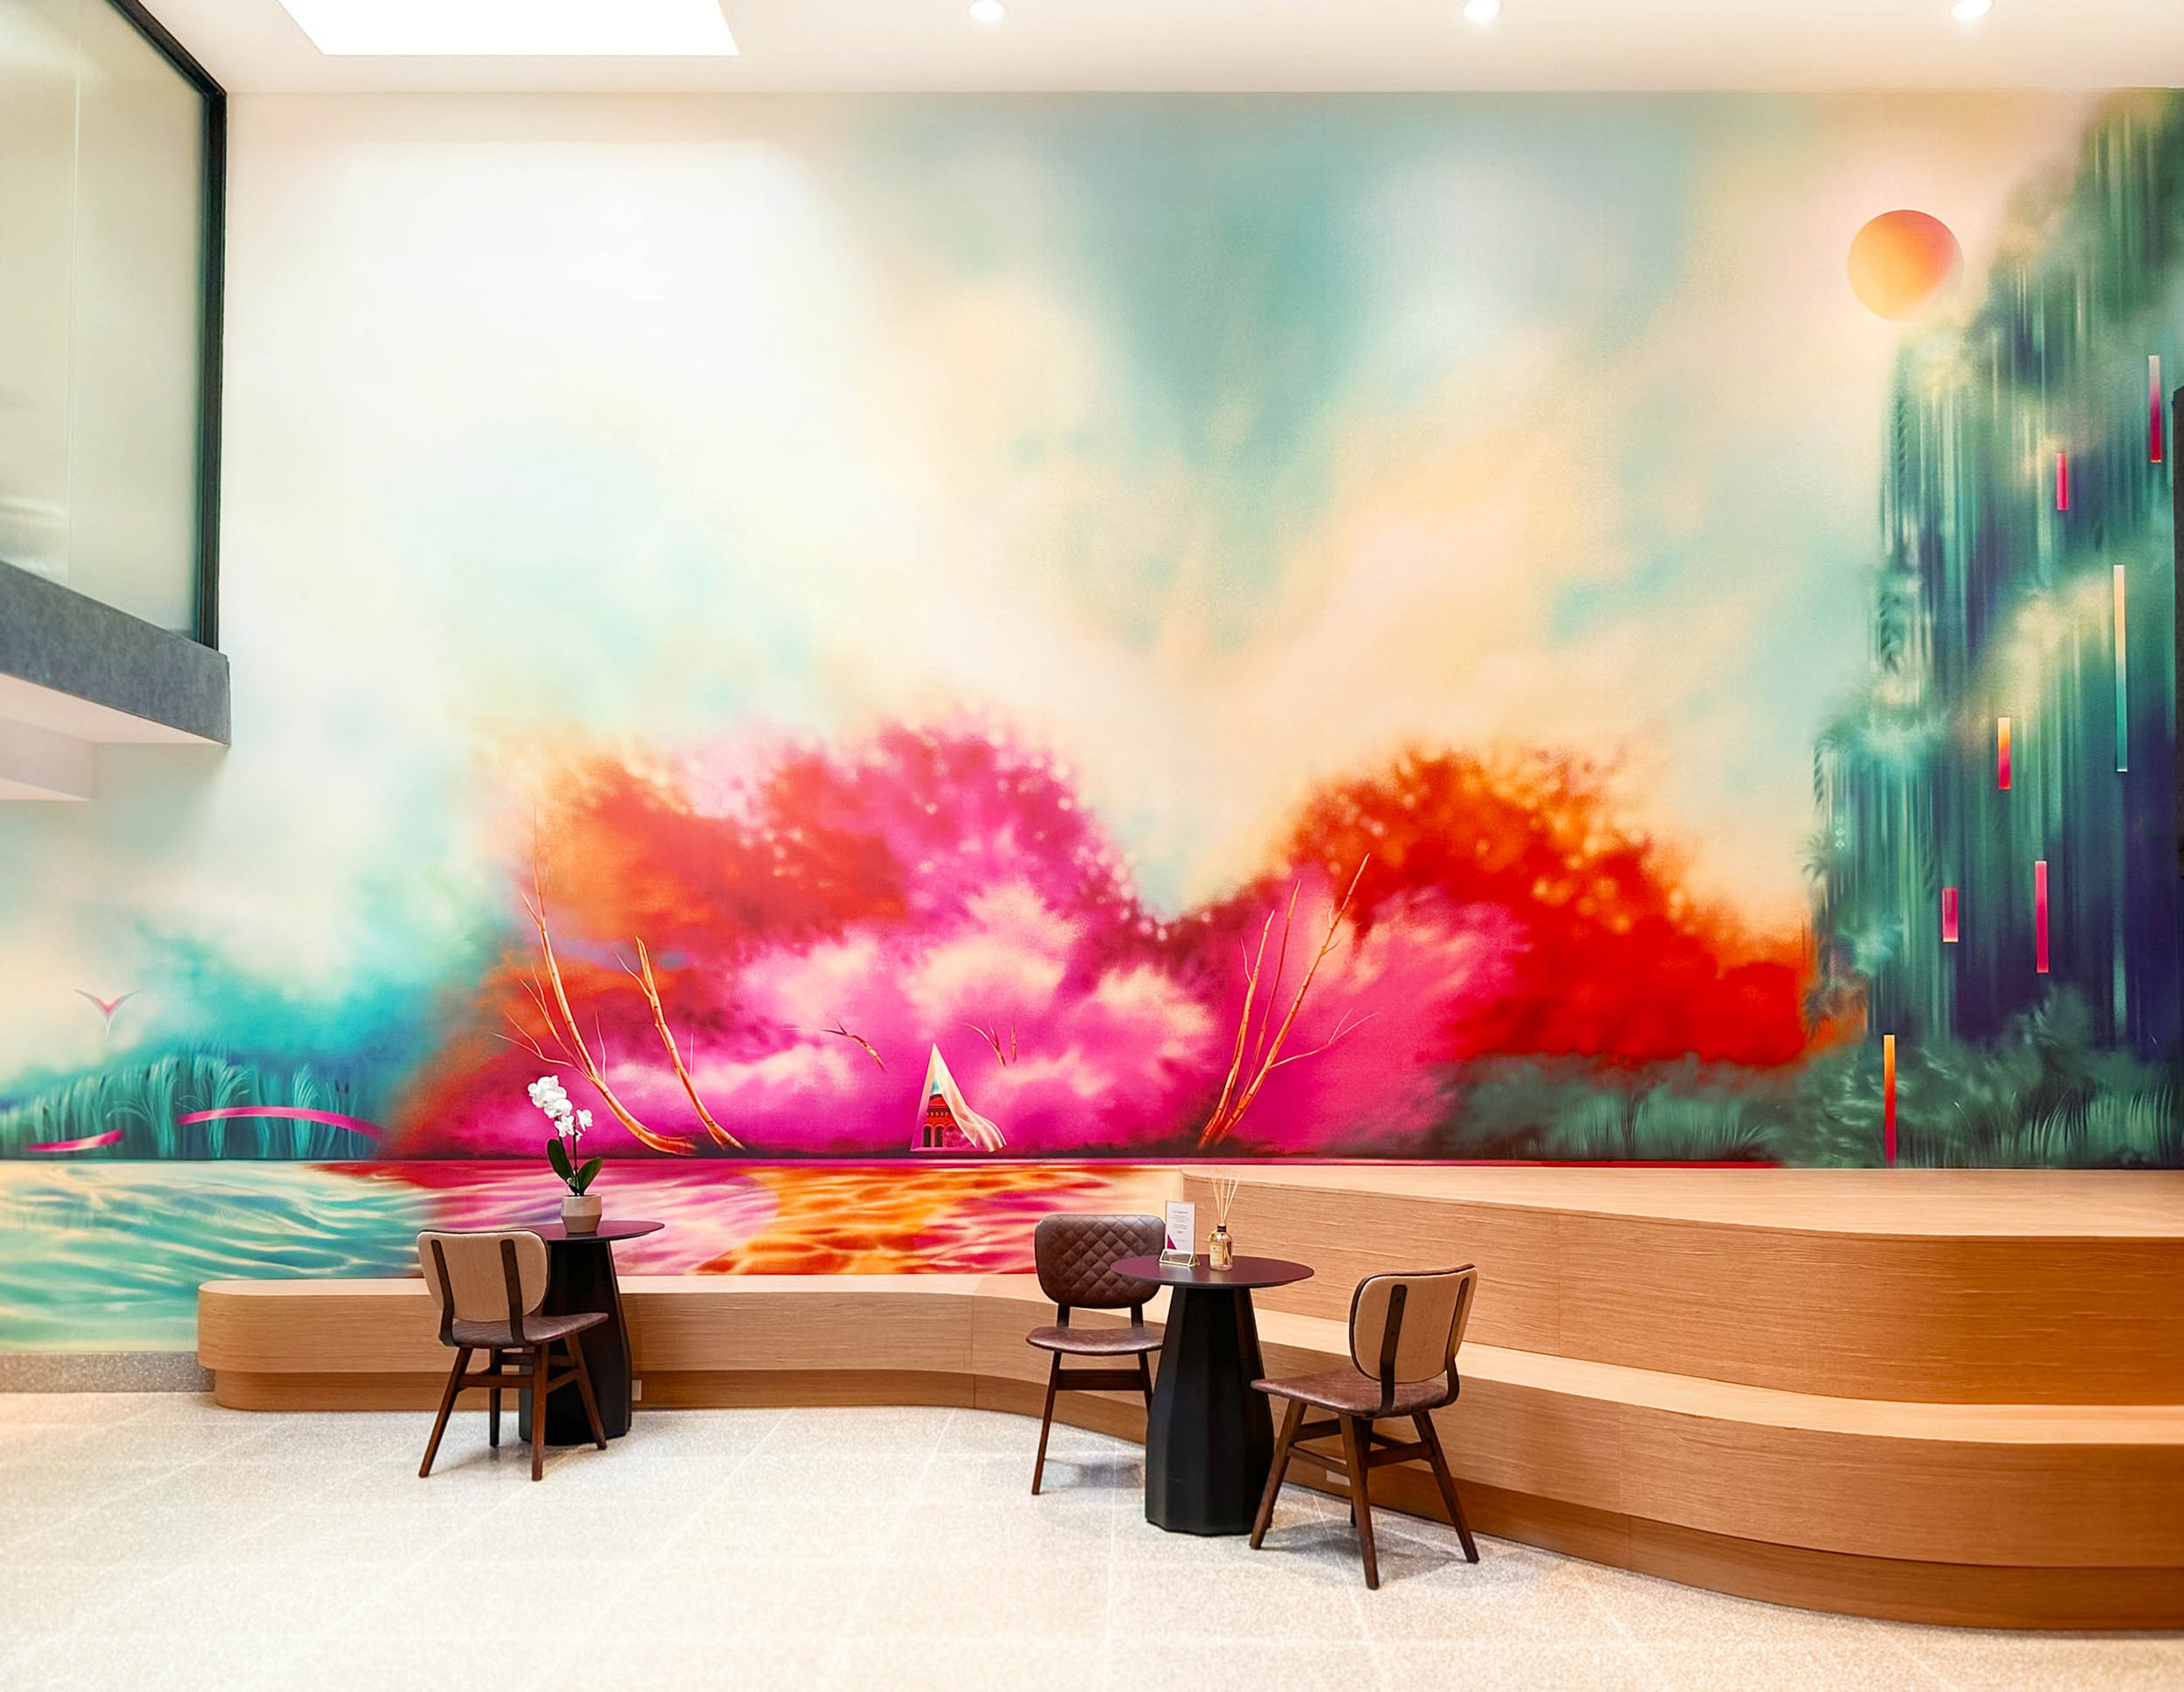 A colourful and bright mural artwork in a condo lobby.